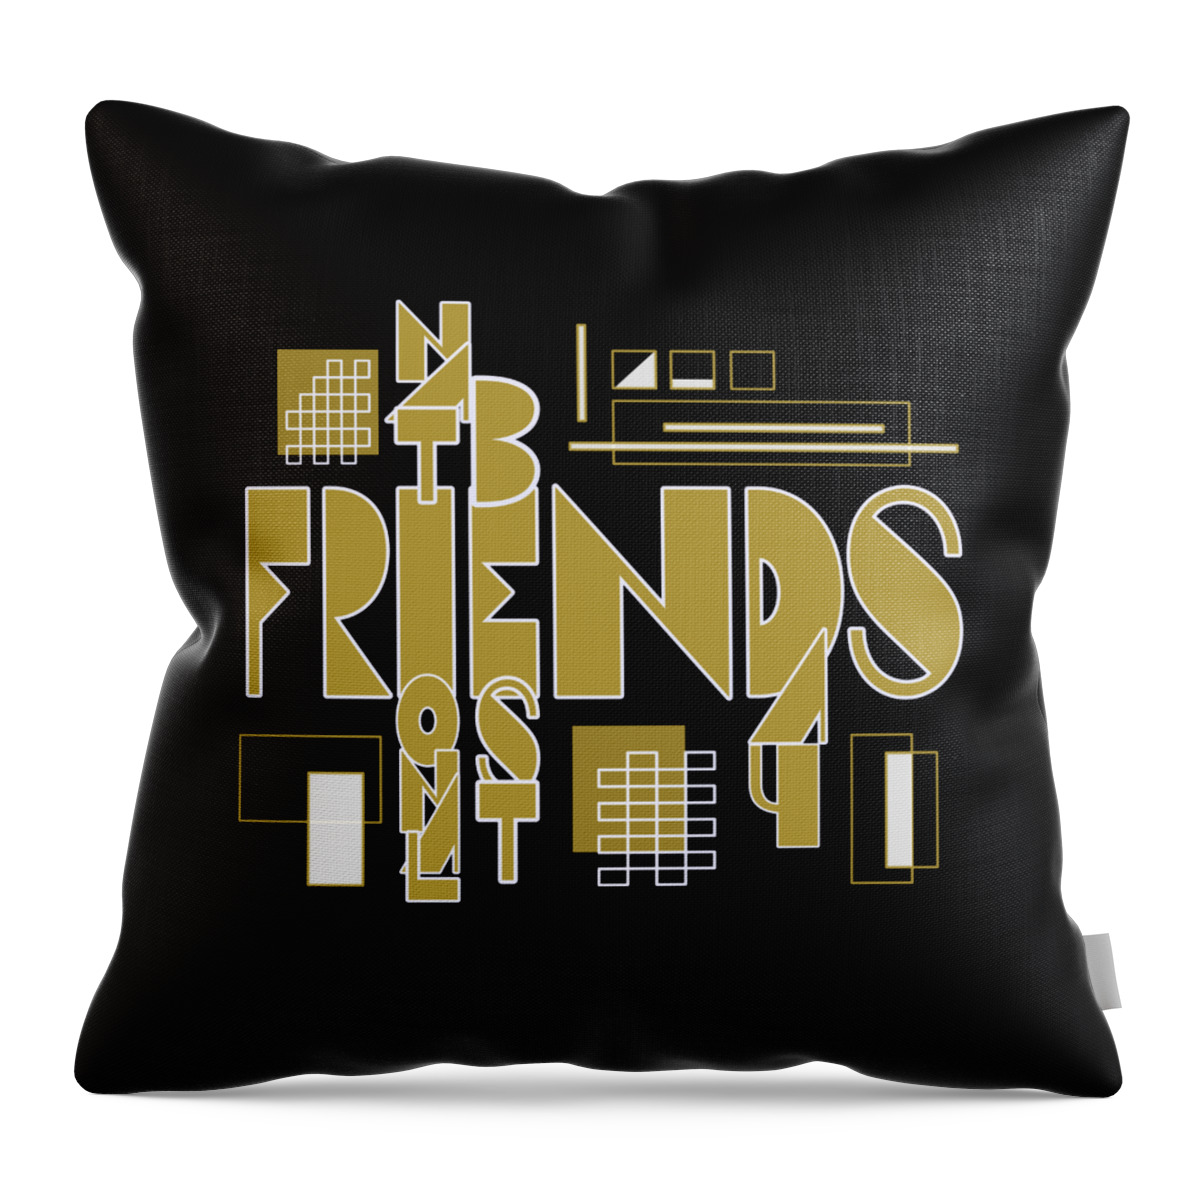 National Best Friends Throw Pillow featuring the digital art National Best Friends June 8th by Delynn Addams